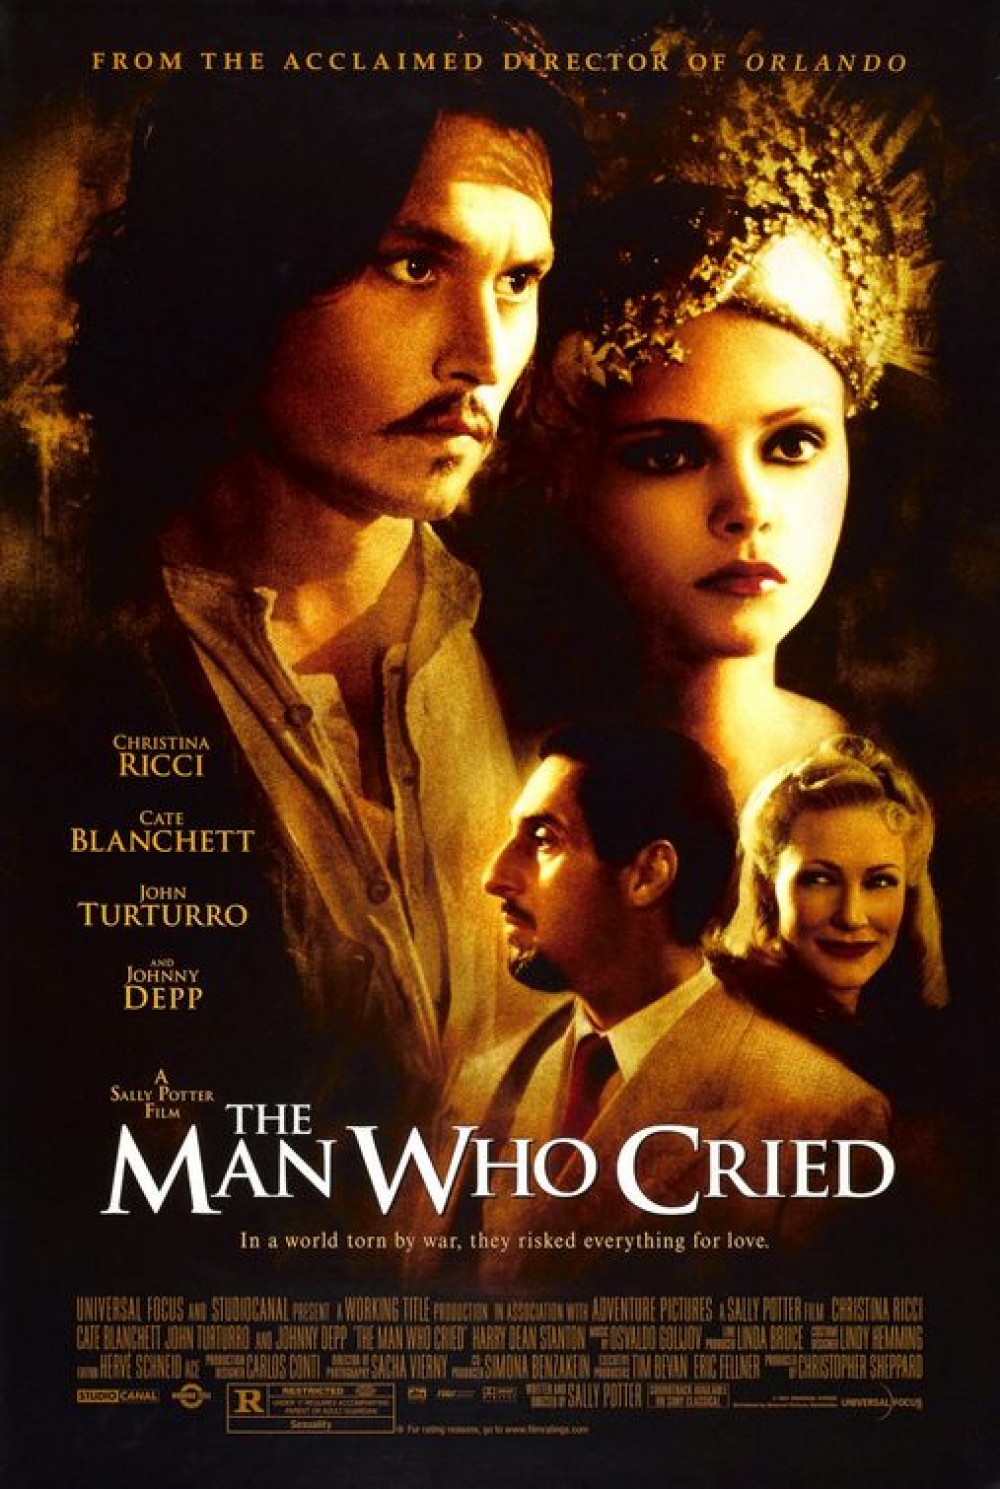 The Man Who Cried / Ο Ανδρας Που Εκλαιγε (2000)